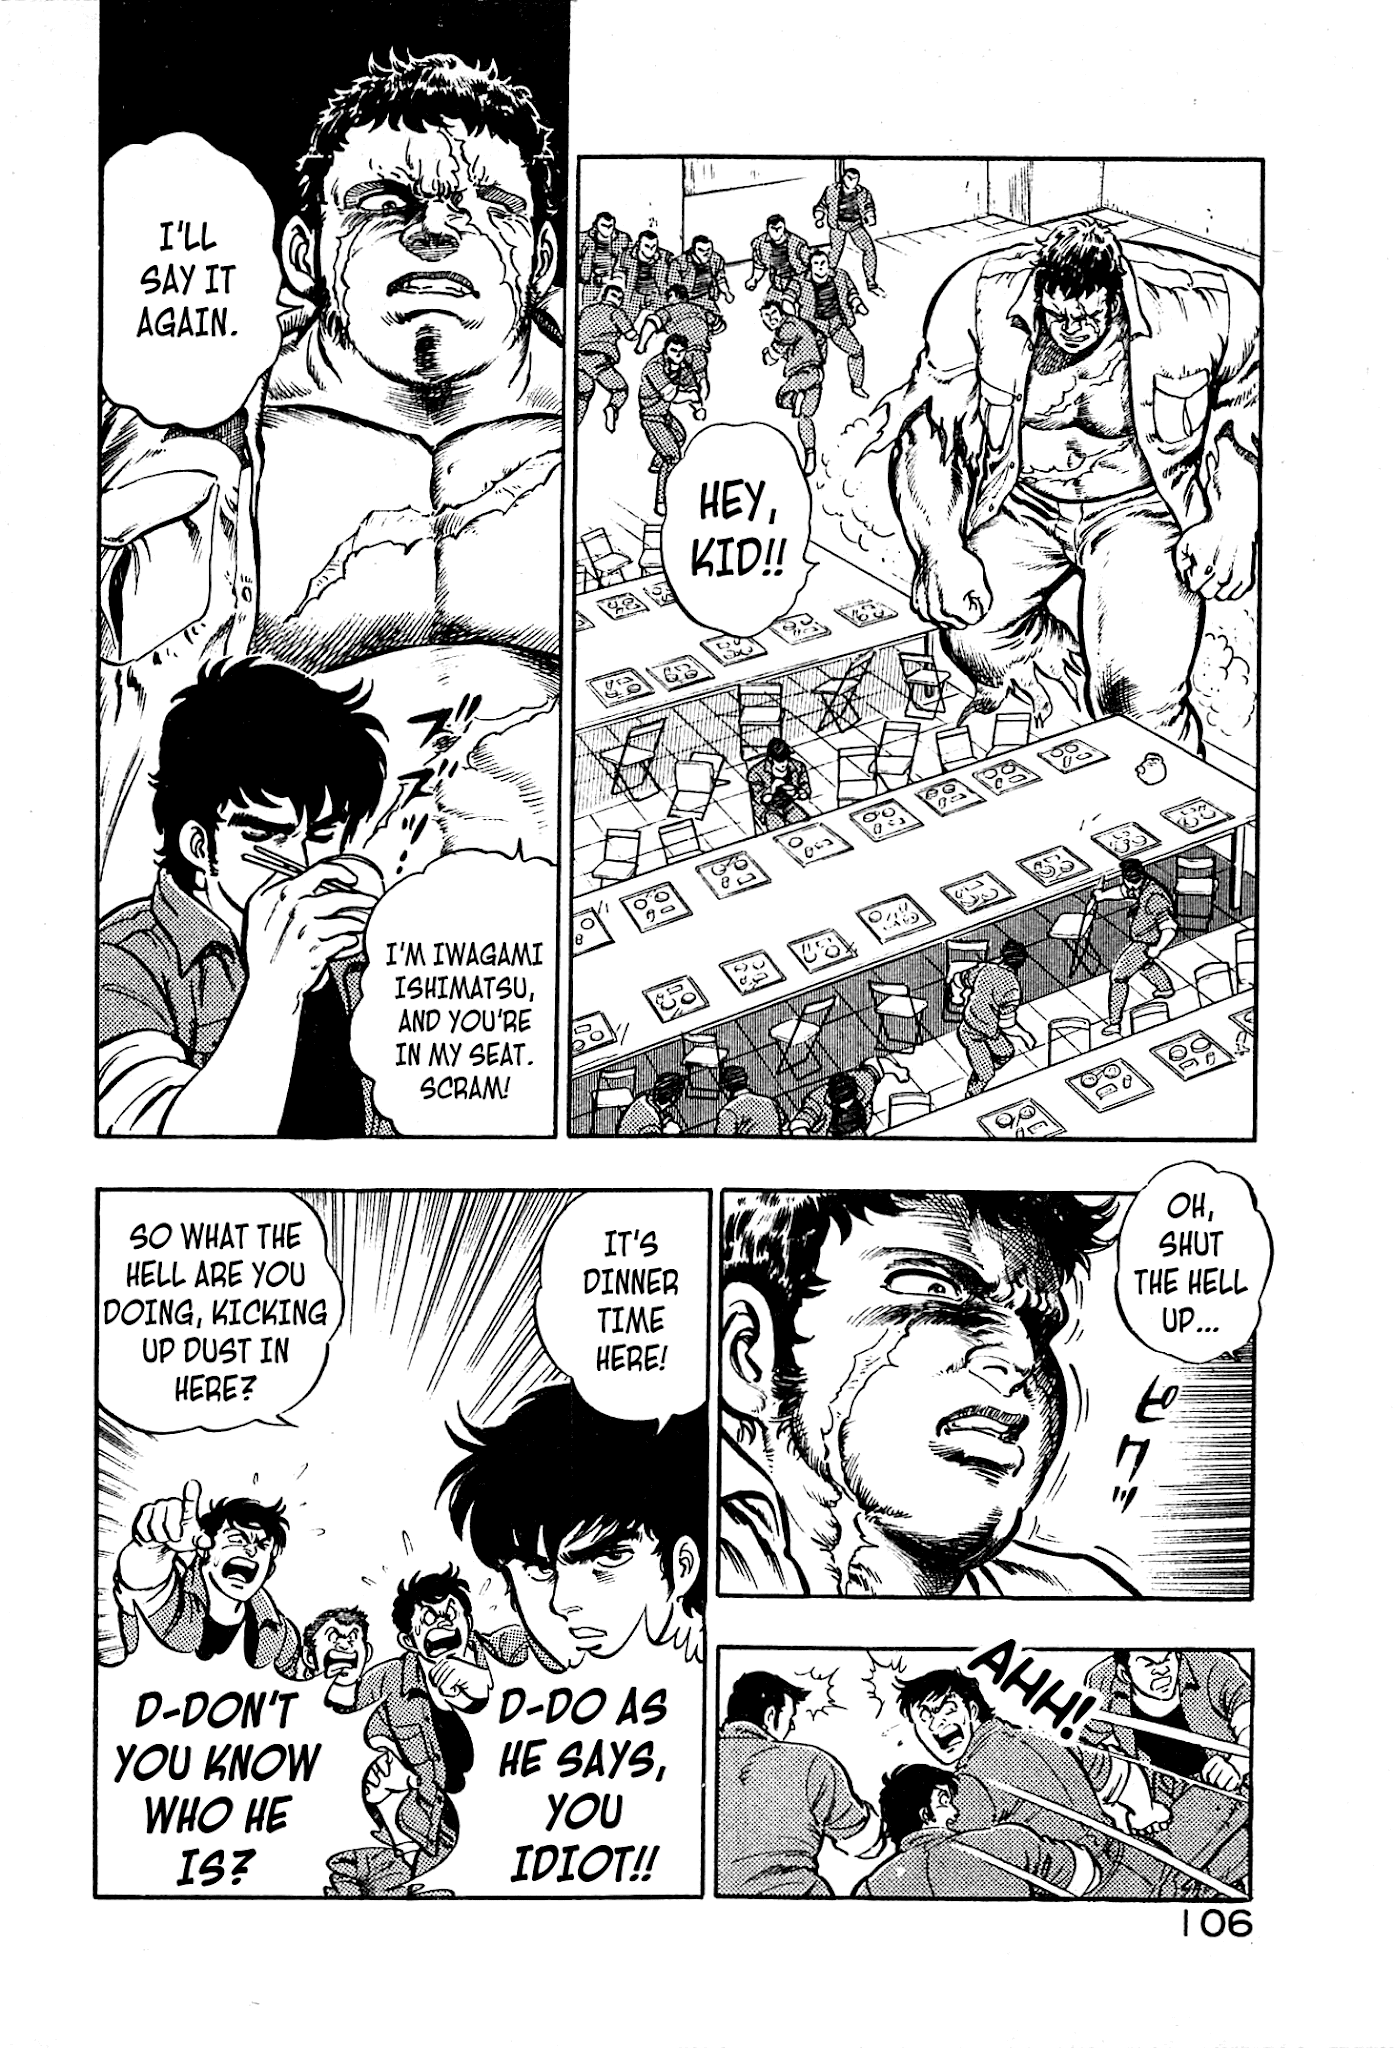 Karate Apocalypse - Page 2